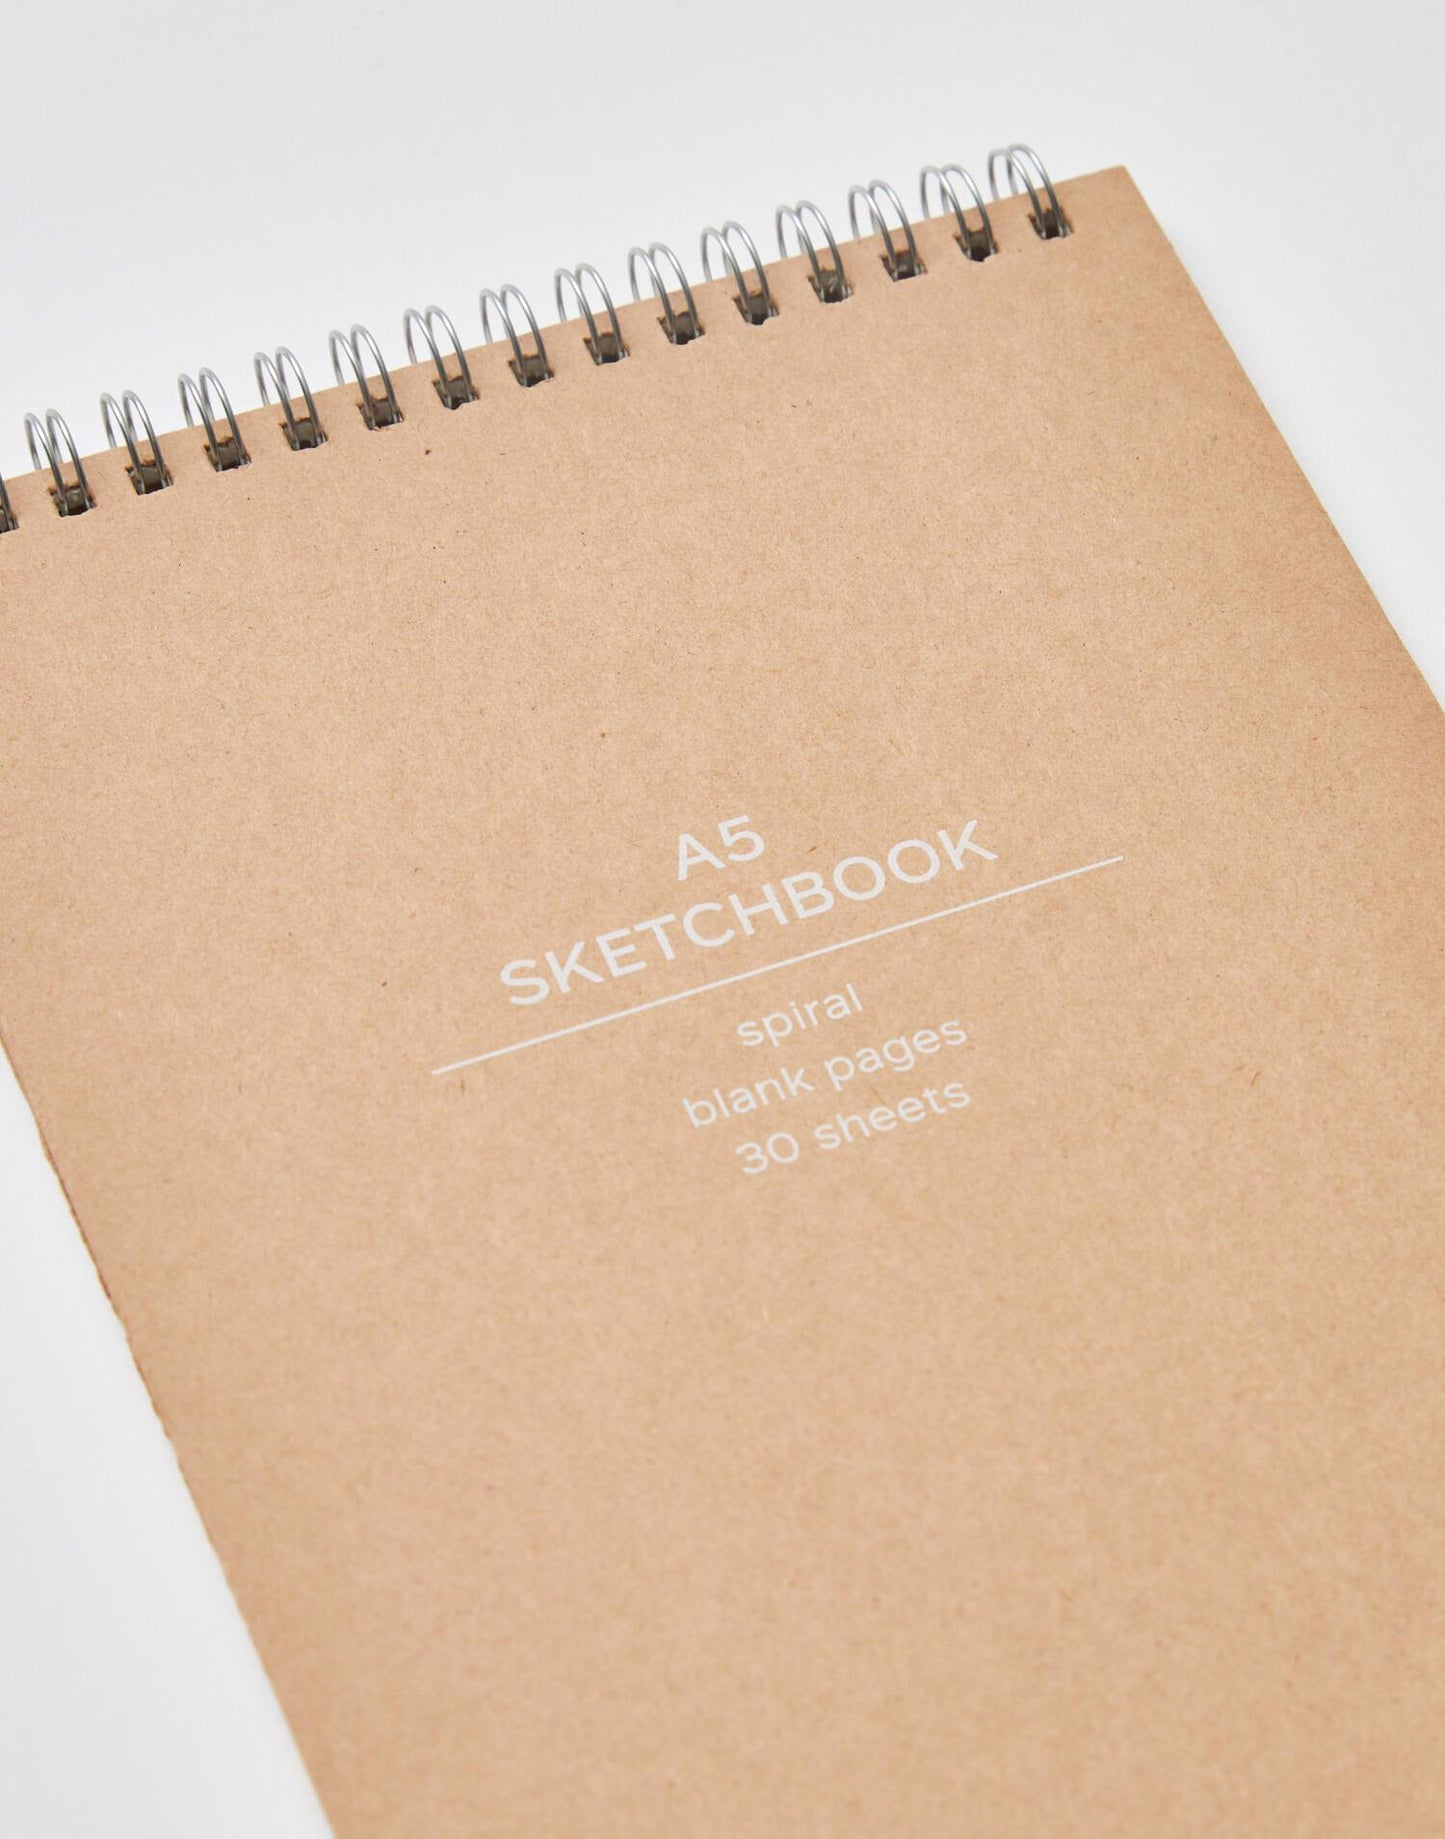 A5 sketchbook